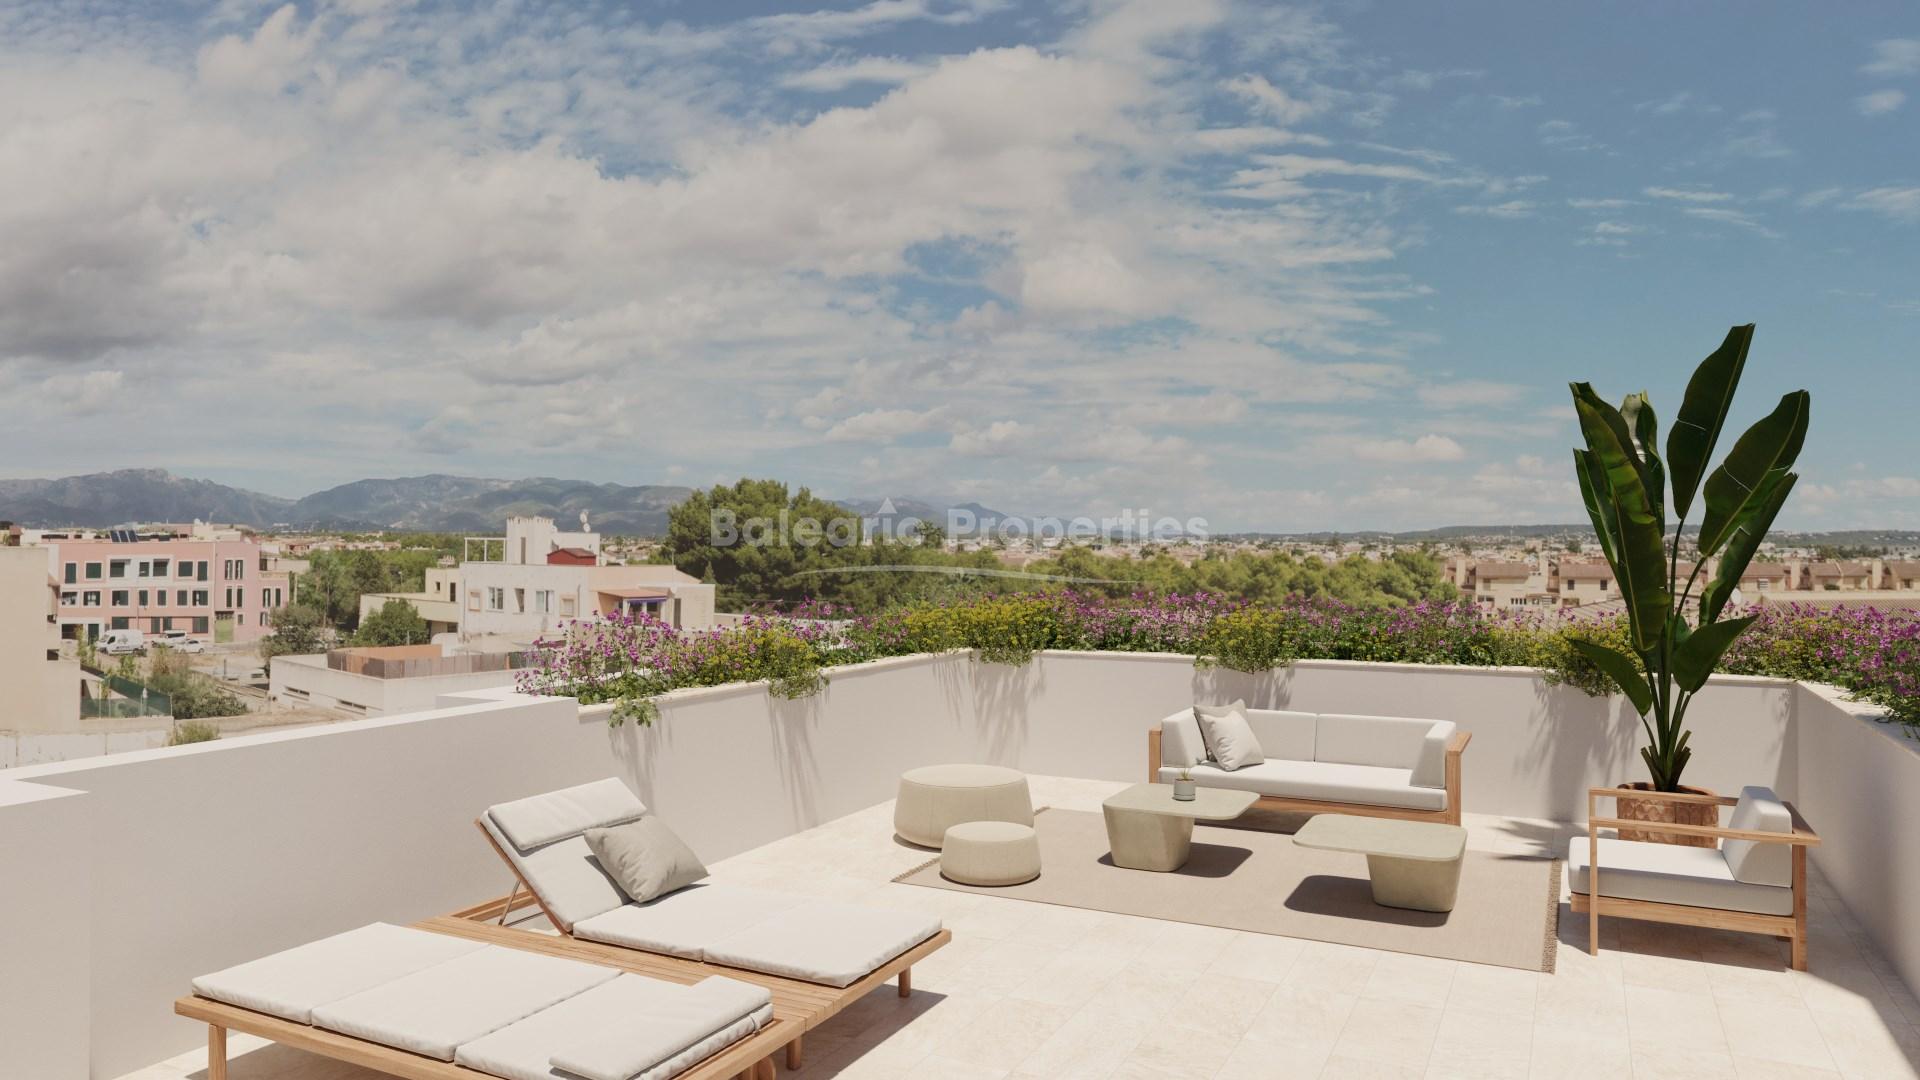 Exclusive modern apartments for sale in Marratxi close to Palma, Mallorca